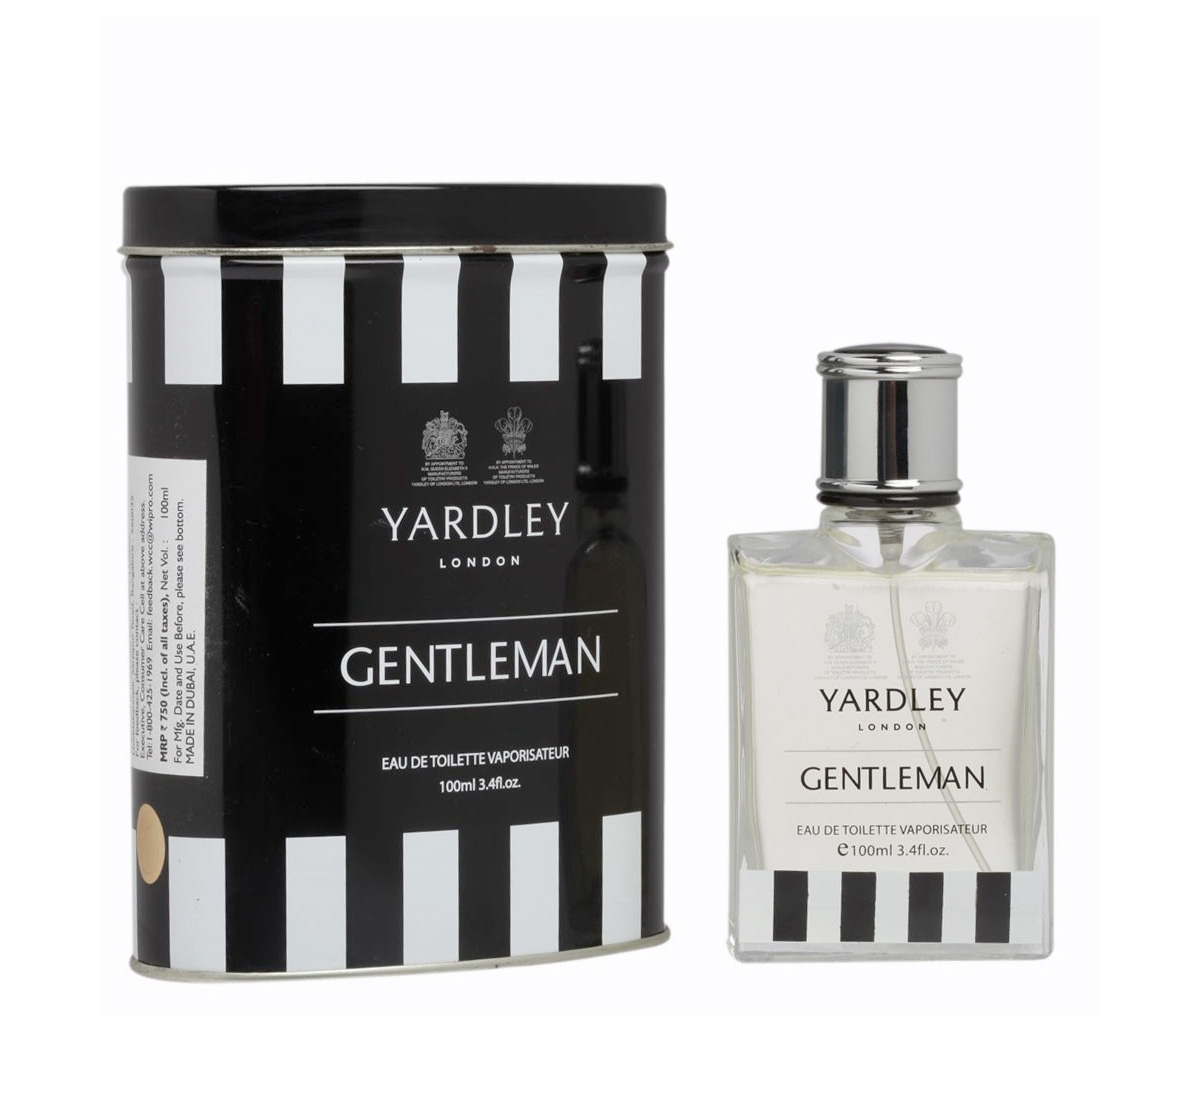 yardley london gentleman legacy price